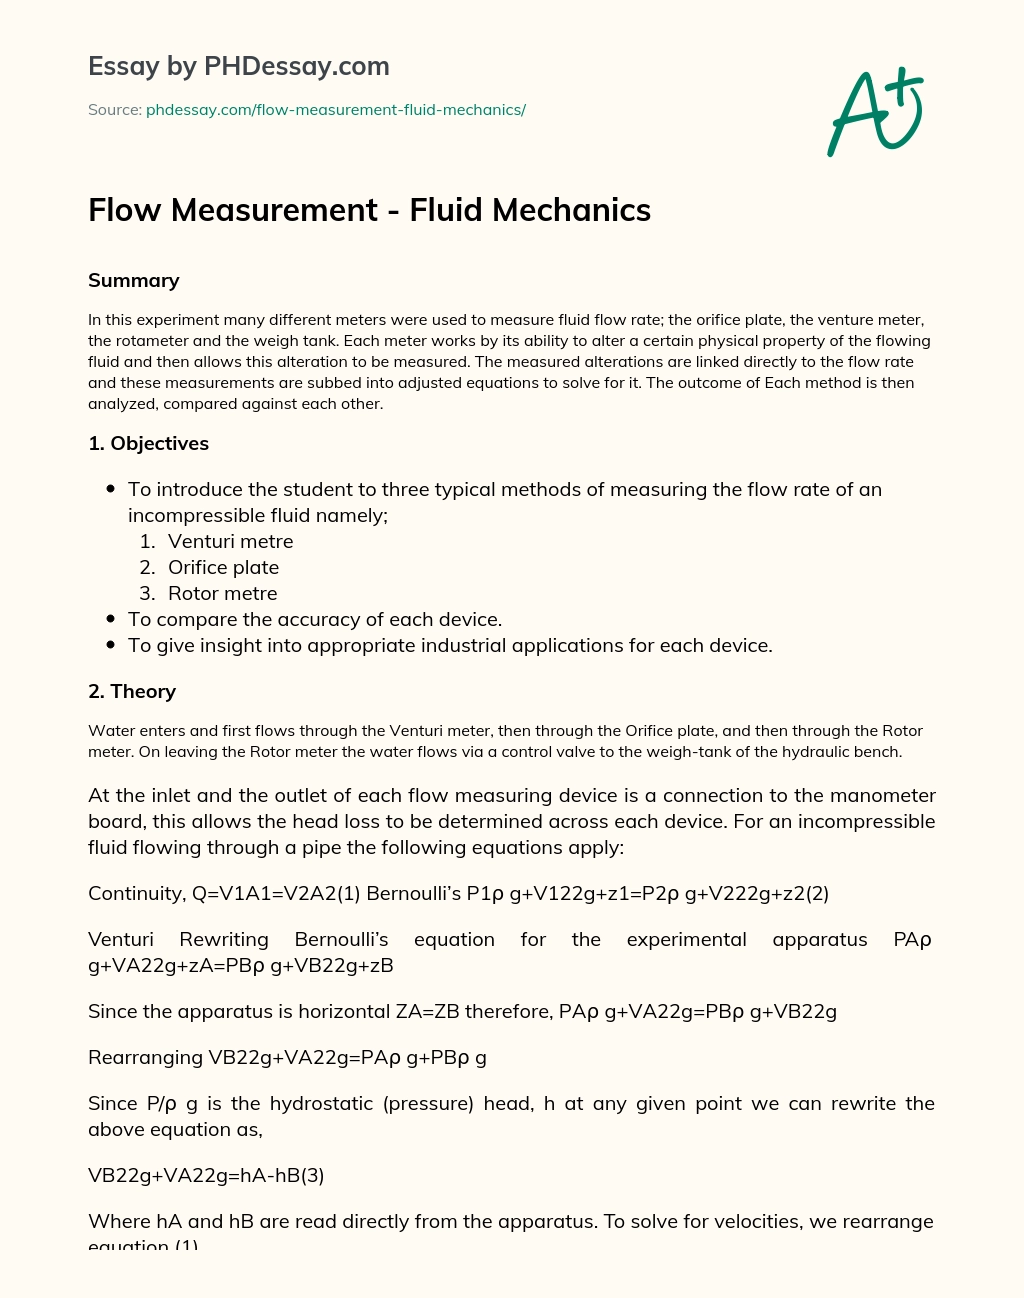 Flow Measurement – Fluid Mechanics essay